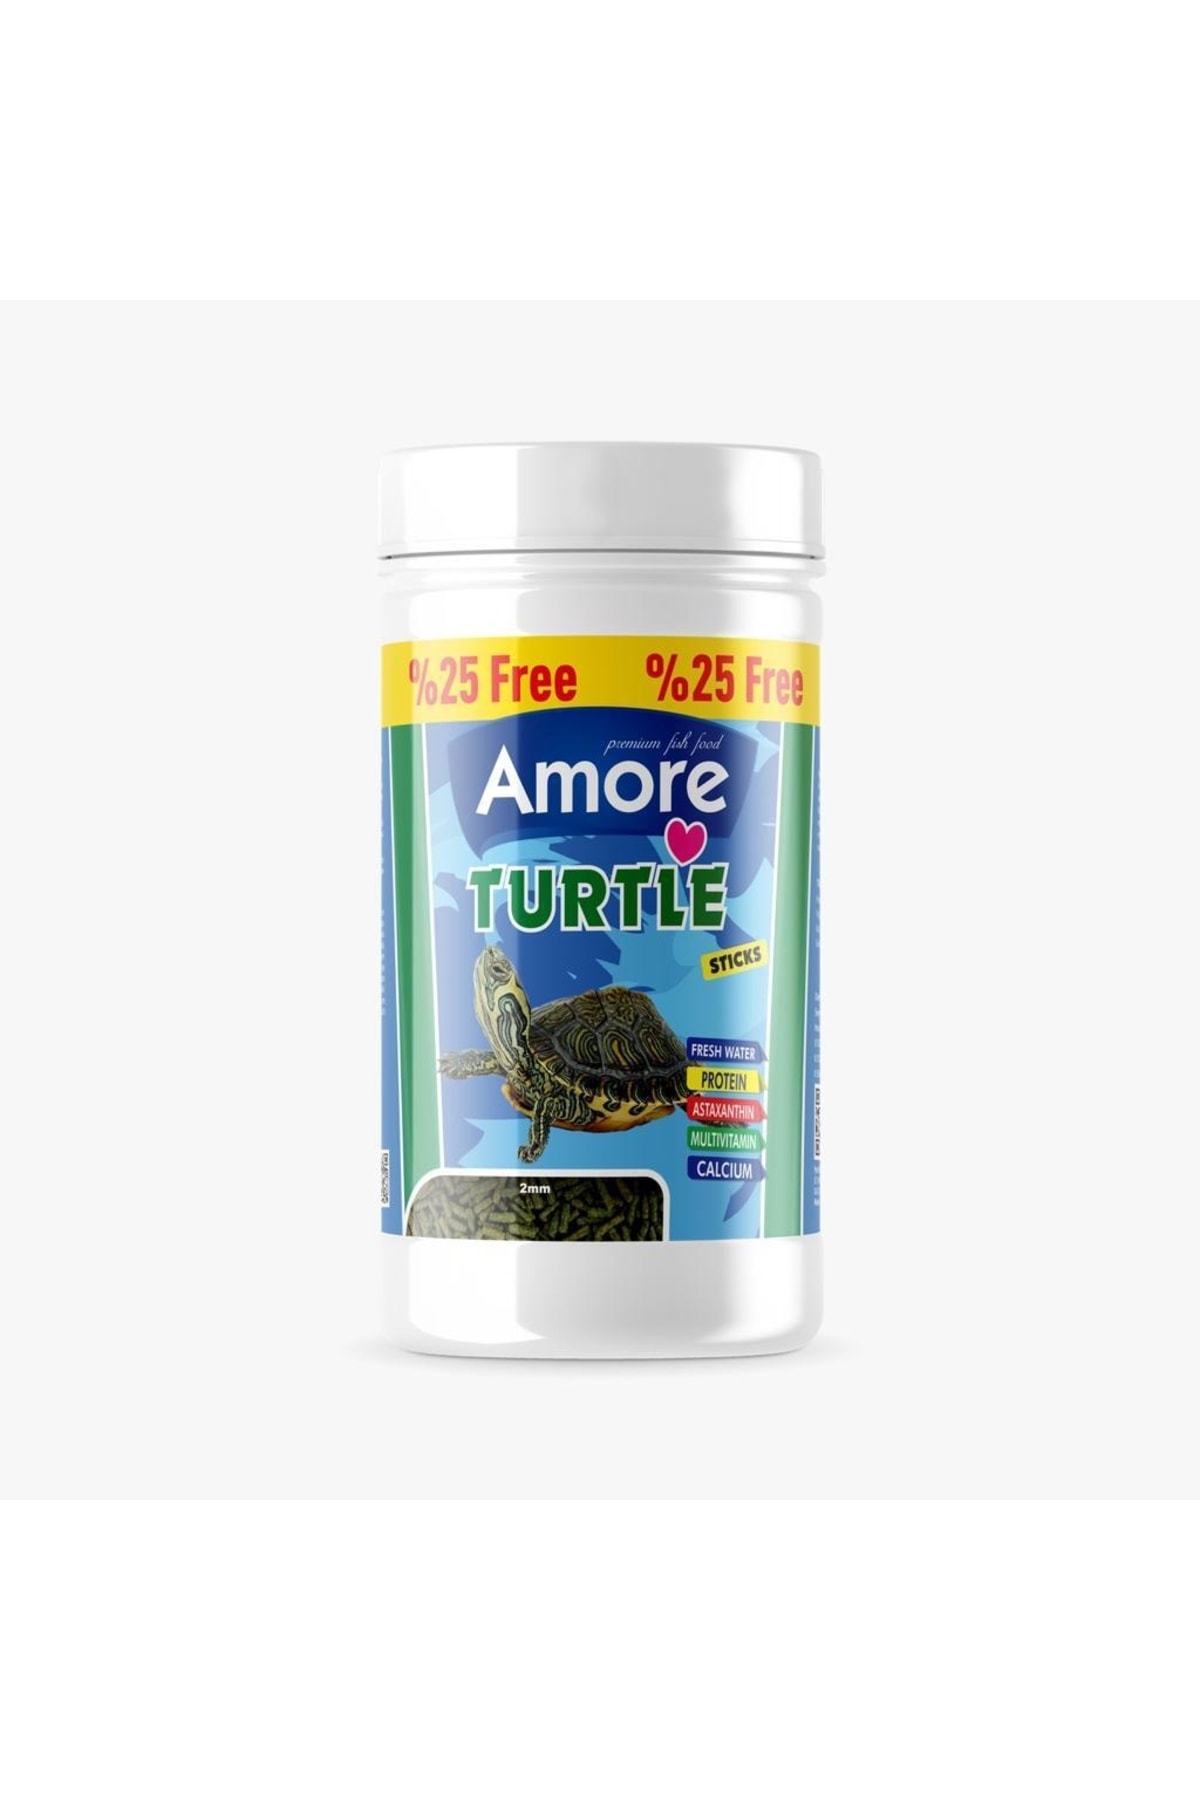 Rose Gammarus 250 Ml, Amore Turtle Sticks 125 Ml Surungen Su Kaplumbagasi Yemi Ve Clear Berraklastirici